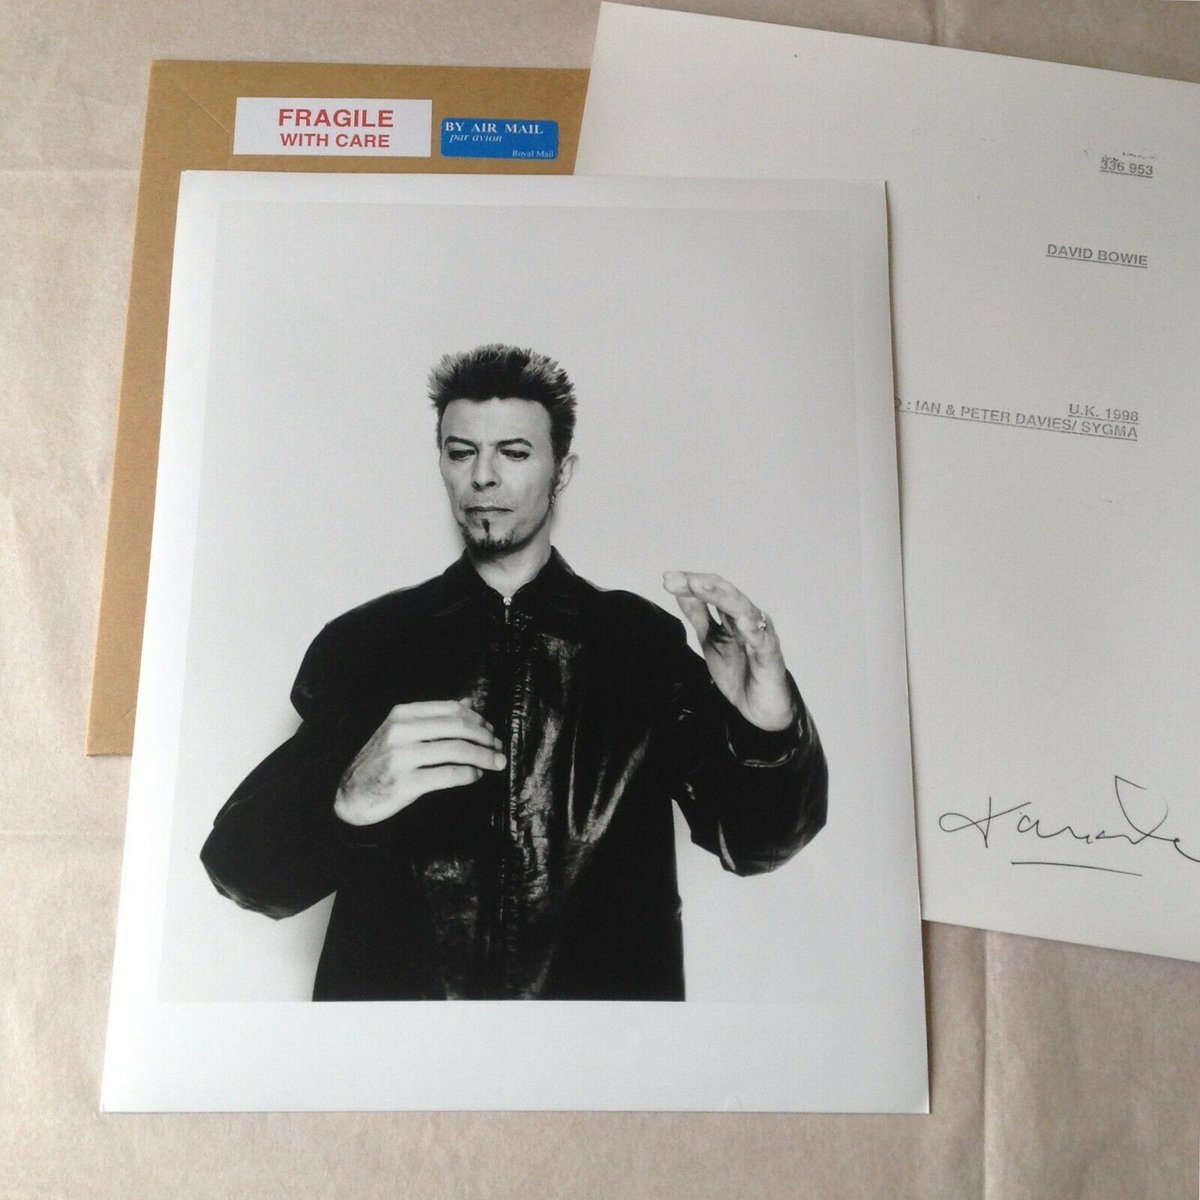 #Bowie released his album #StationToStation on this day 44 years ago

Enjoy #GoldenYears youtube.com/watch?v=JUuRGR… 

#DavidBowie Promo(tion) Prints.

@ eBay: ebay.co.uk/sch/fma1-uk/m.… Etsy: etsy.com/uk/shop/TheHus…

#DavidBowieForever #BowieForever  

Ph #IanDavies

Worldwide Delivery